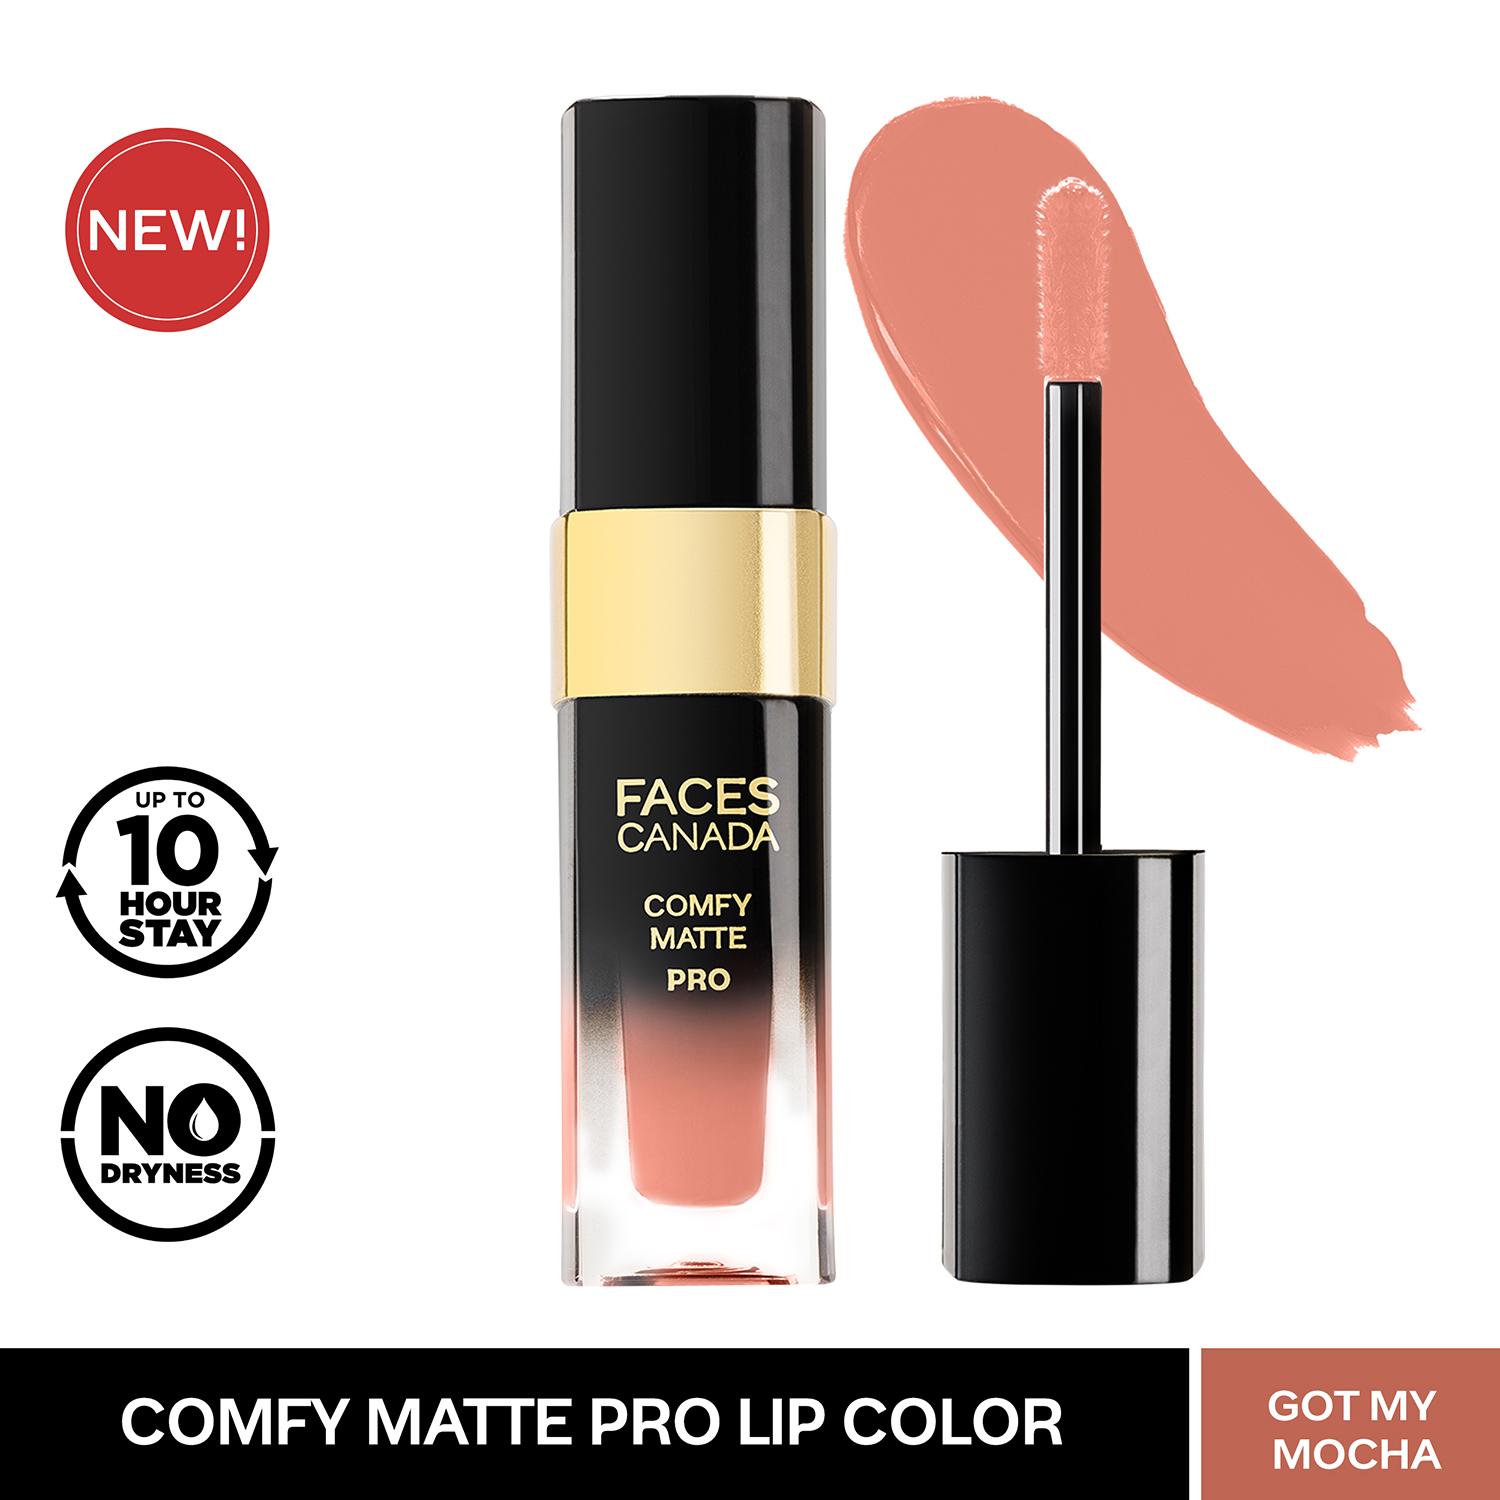 Faces Canada | Faces Canada Comfy Matte Pro Liquid Lipstick - Got My Mocha 17, 10HR Stay, No Dryness (5.5 ml)